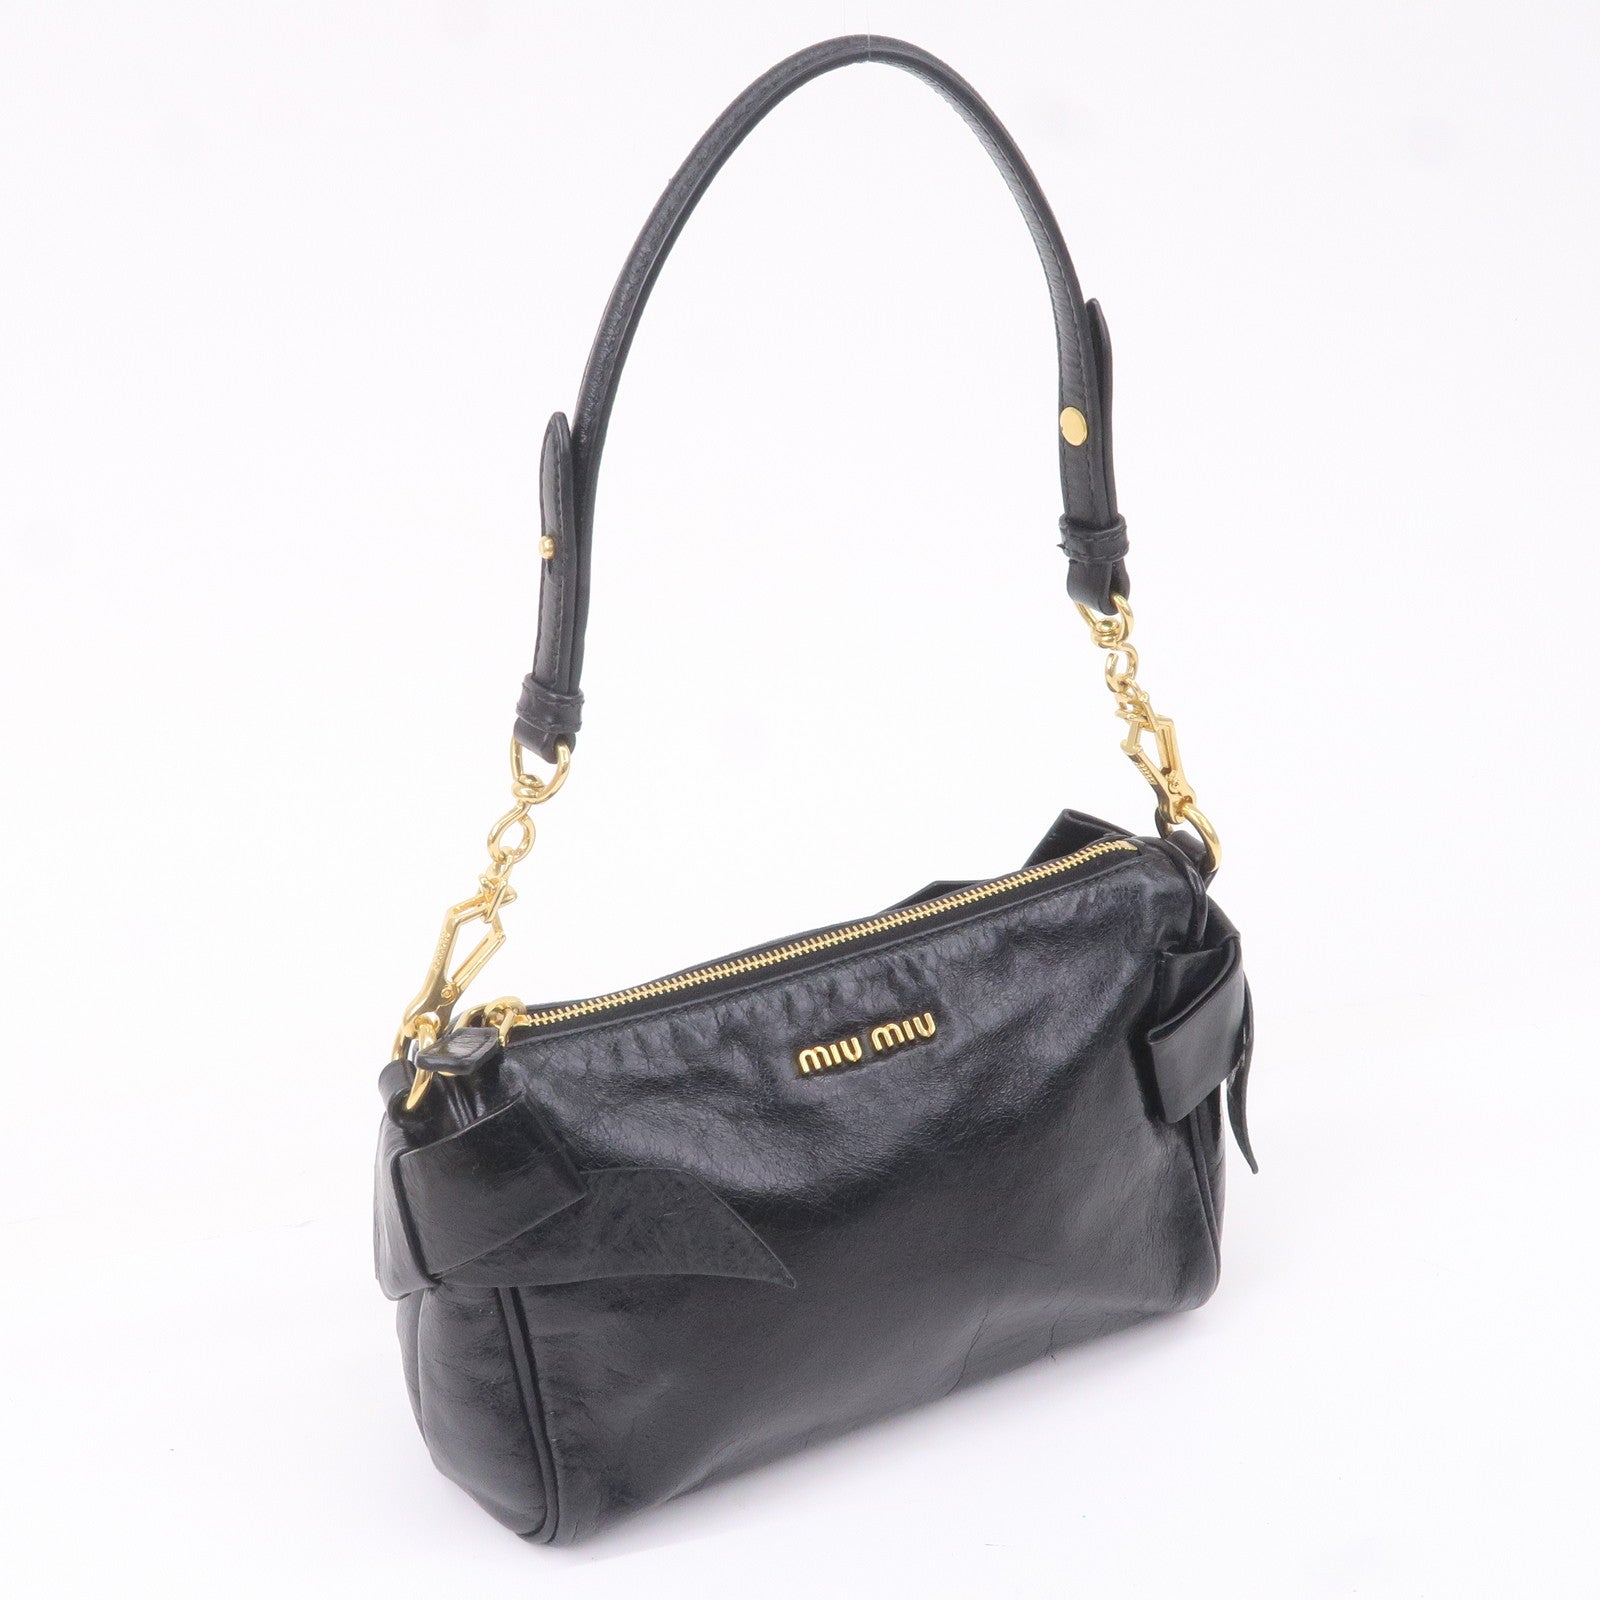 Authentic Miu Miu Vitello Lux Bow Bag (Nero/ Black)